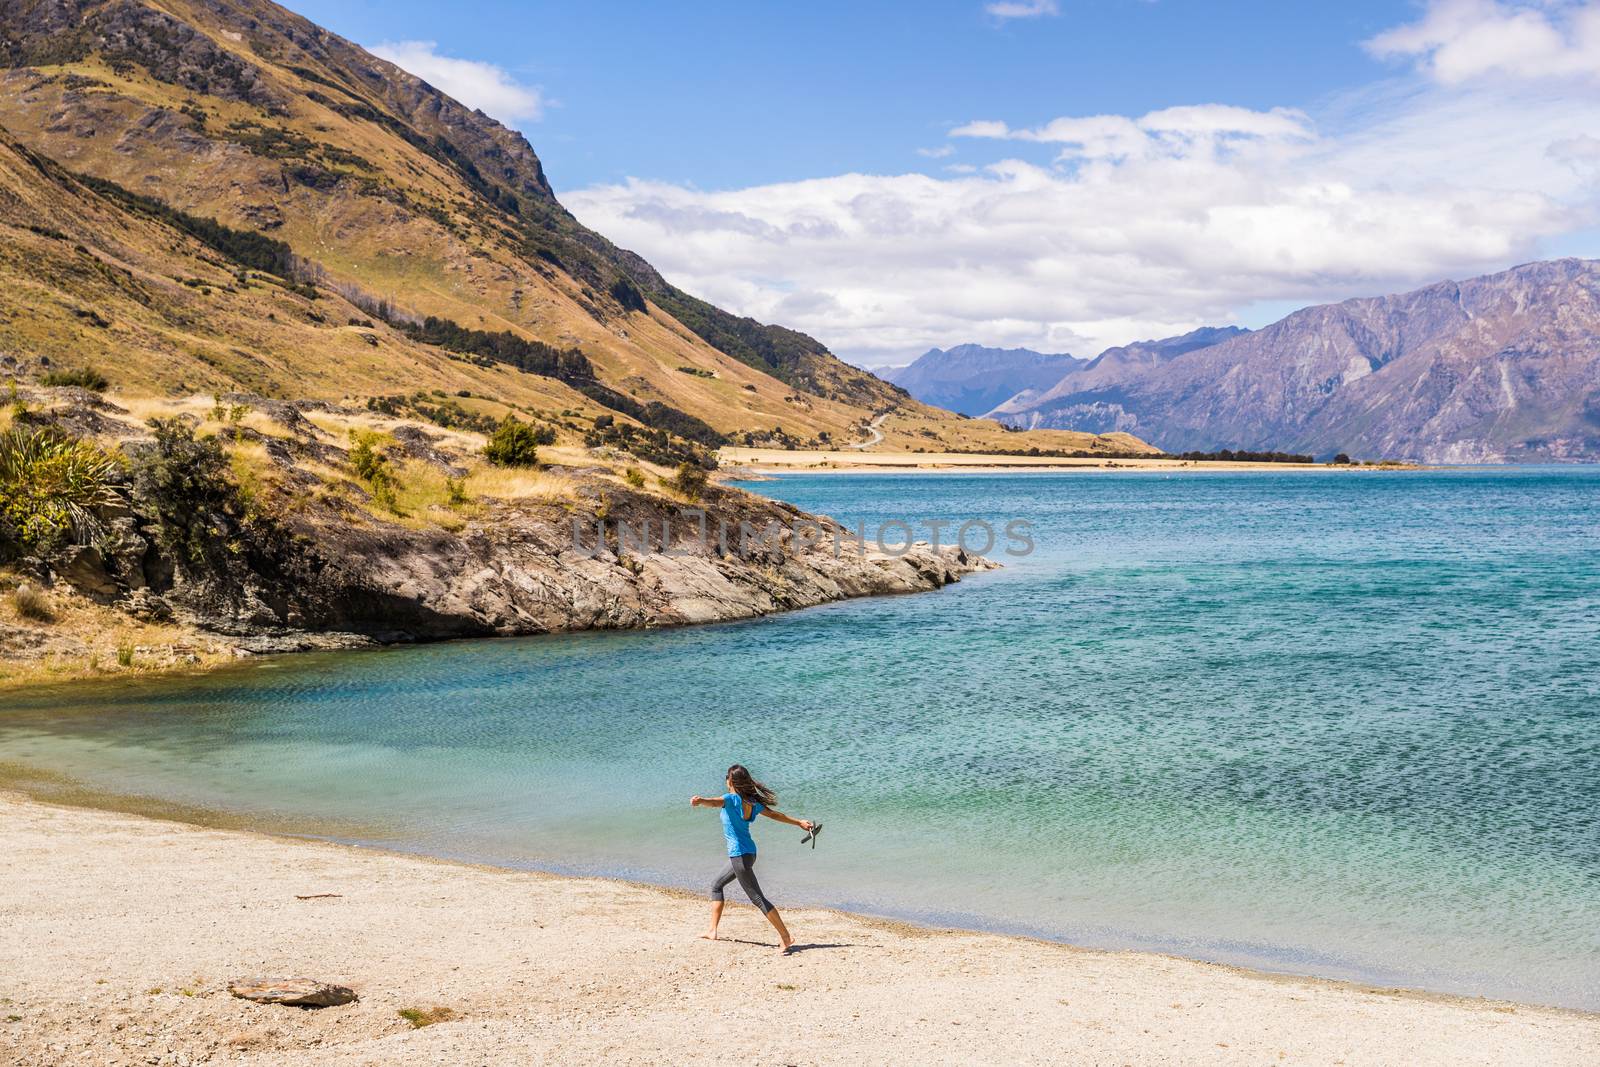 New Zealand travel happy tourist woman running of joy and freedom at beach shore of lake Hawea nature landscape. Near Wanaka, Otago Region by Maridav